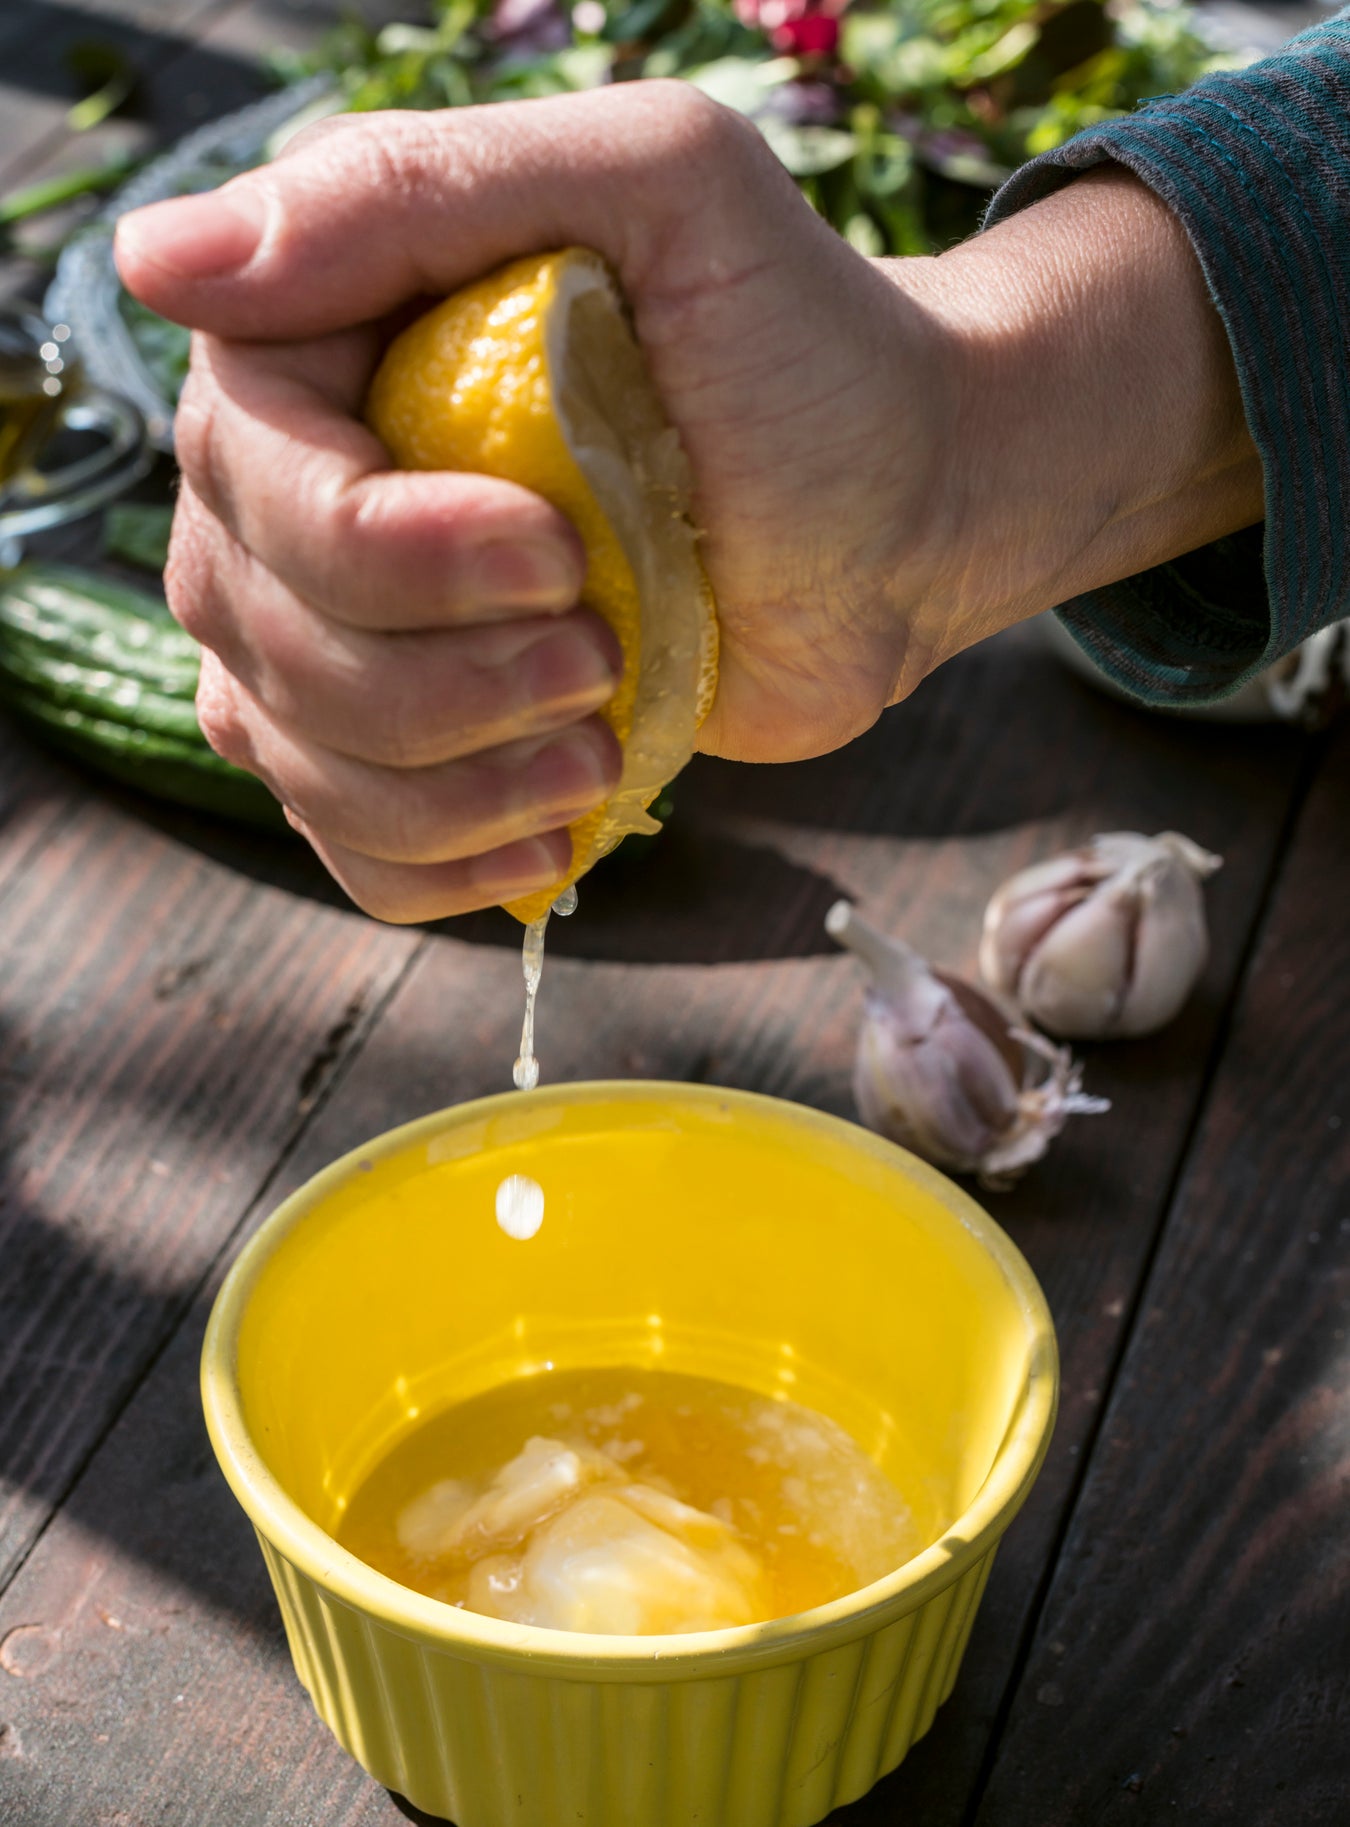 Squeezing lemon into a bowl